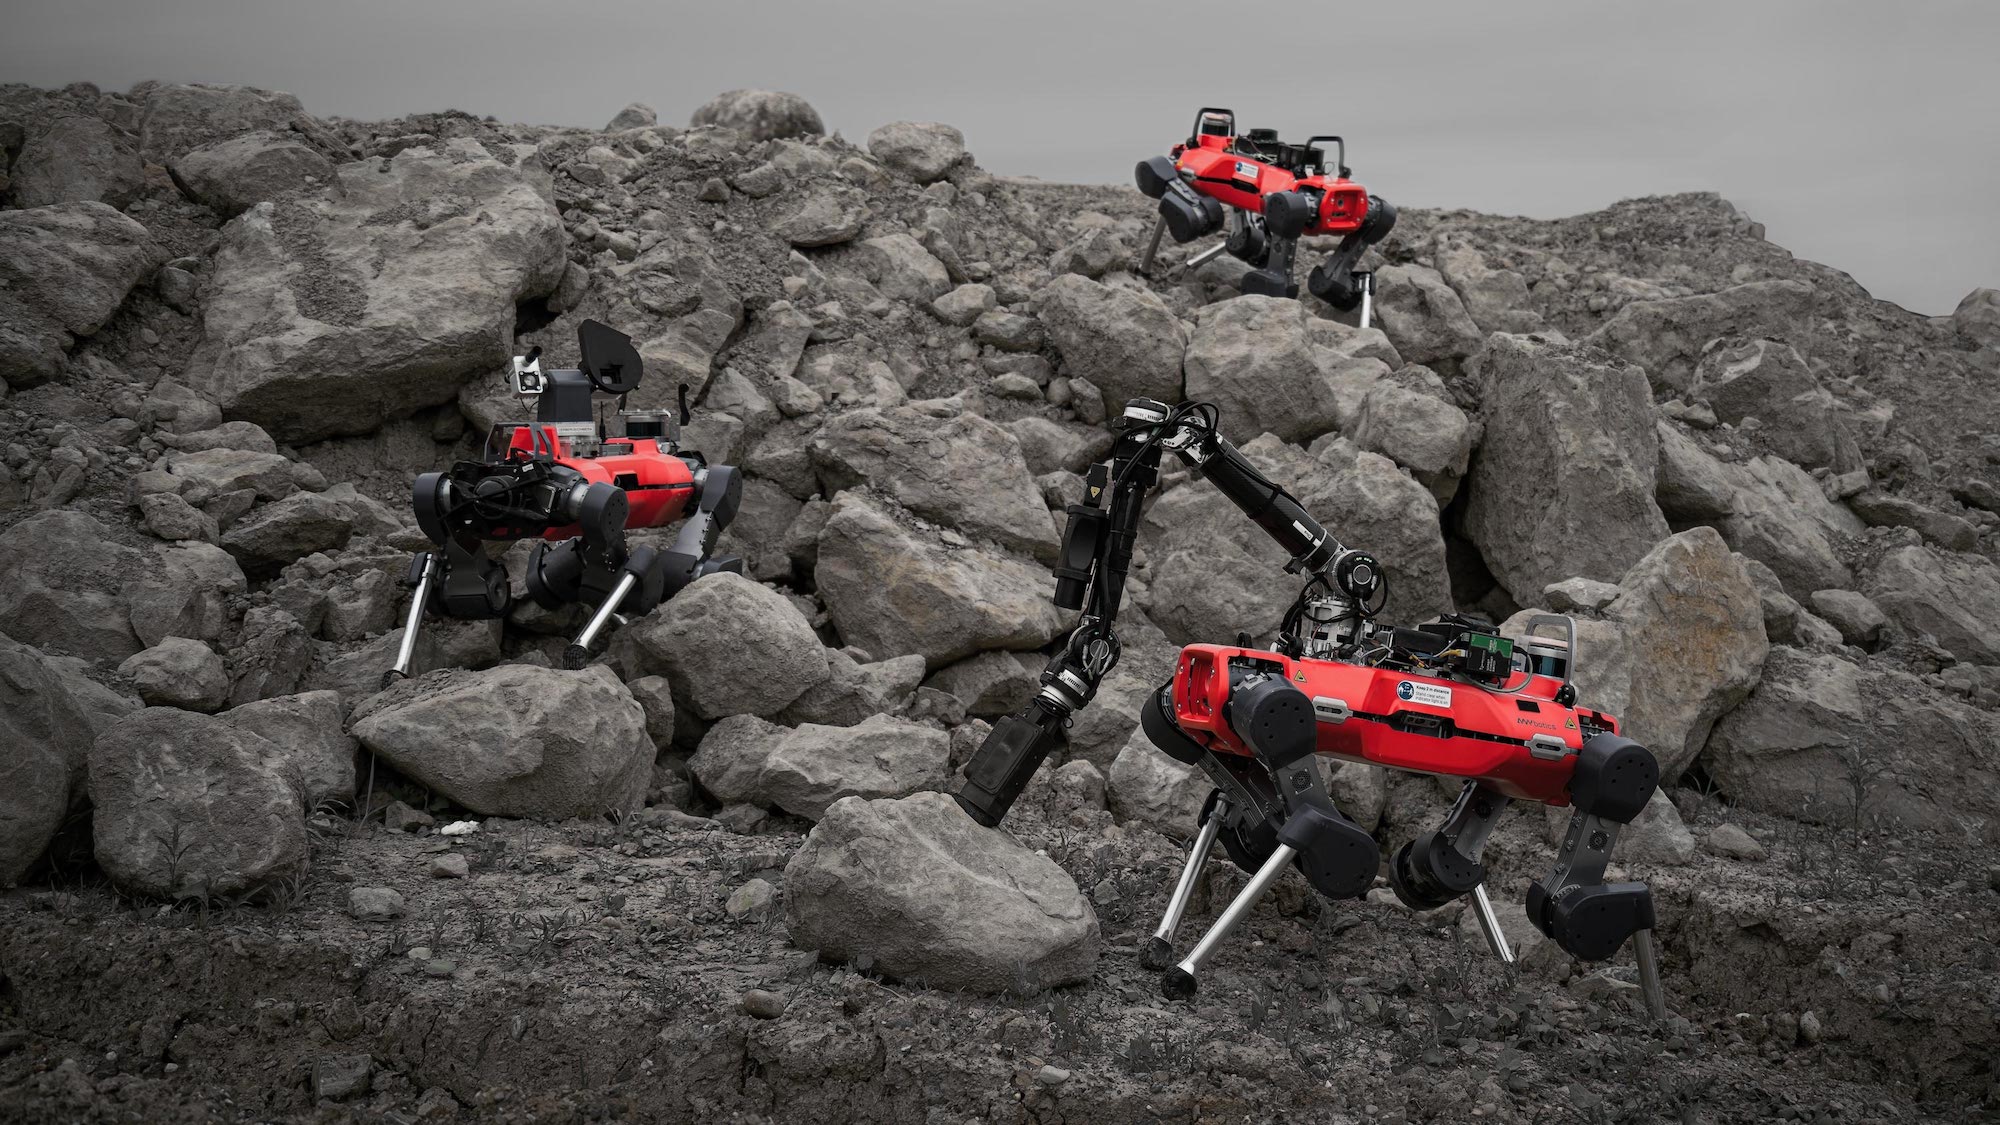 Three quadruped robots standing on rocky terrain